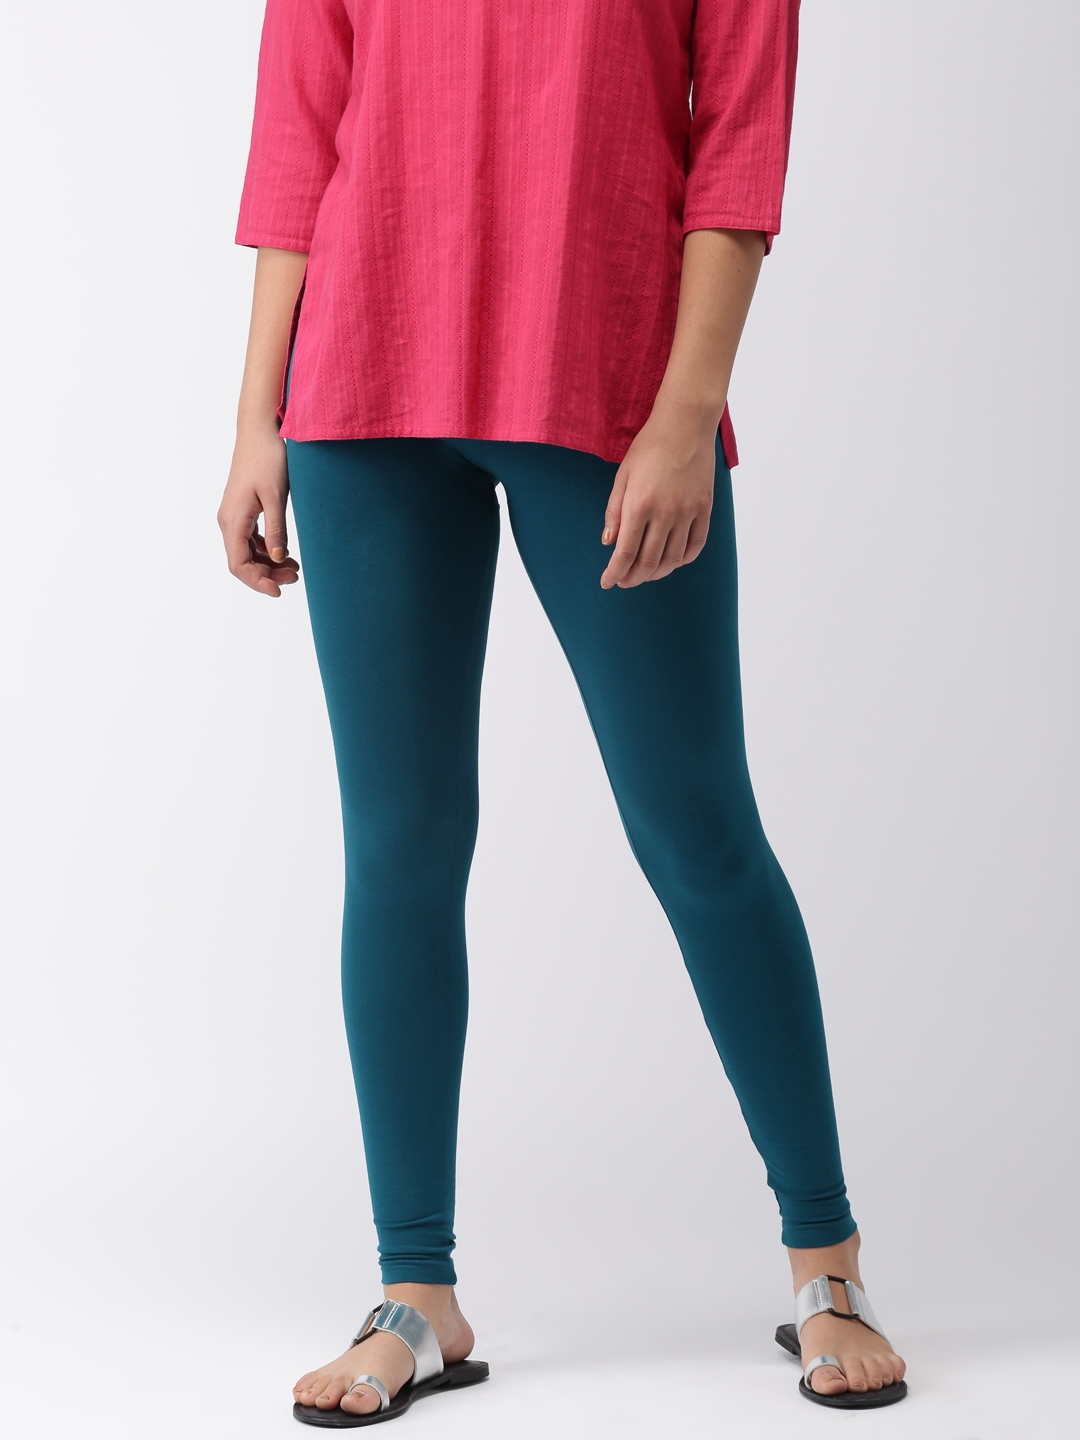 Buy go colors leggings women in India @ Limeroad-anthinhphatland.vn